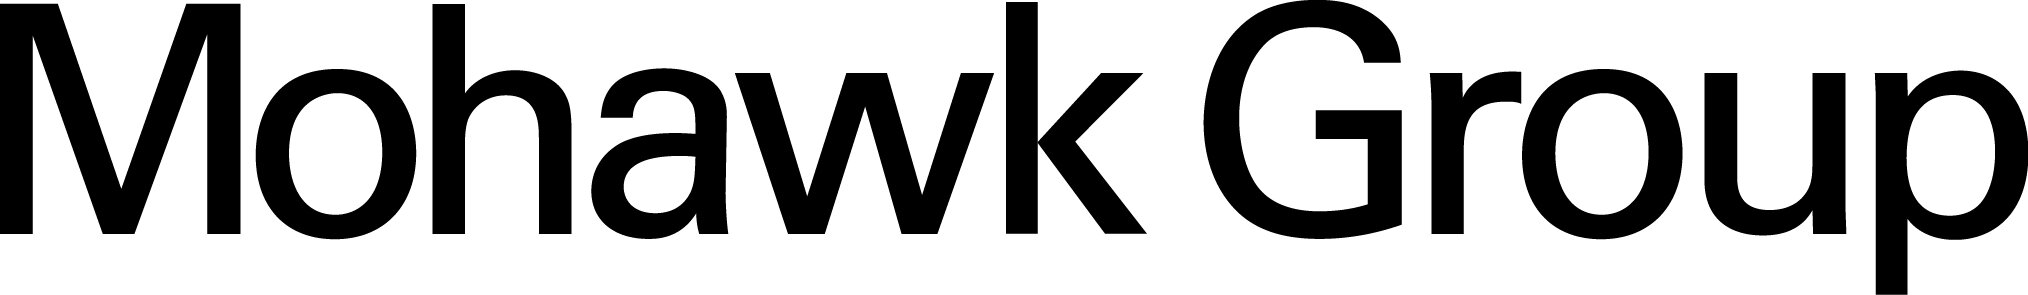 2017_Mohawk_Group_Logotype_black.jpg